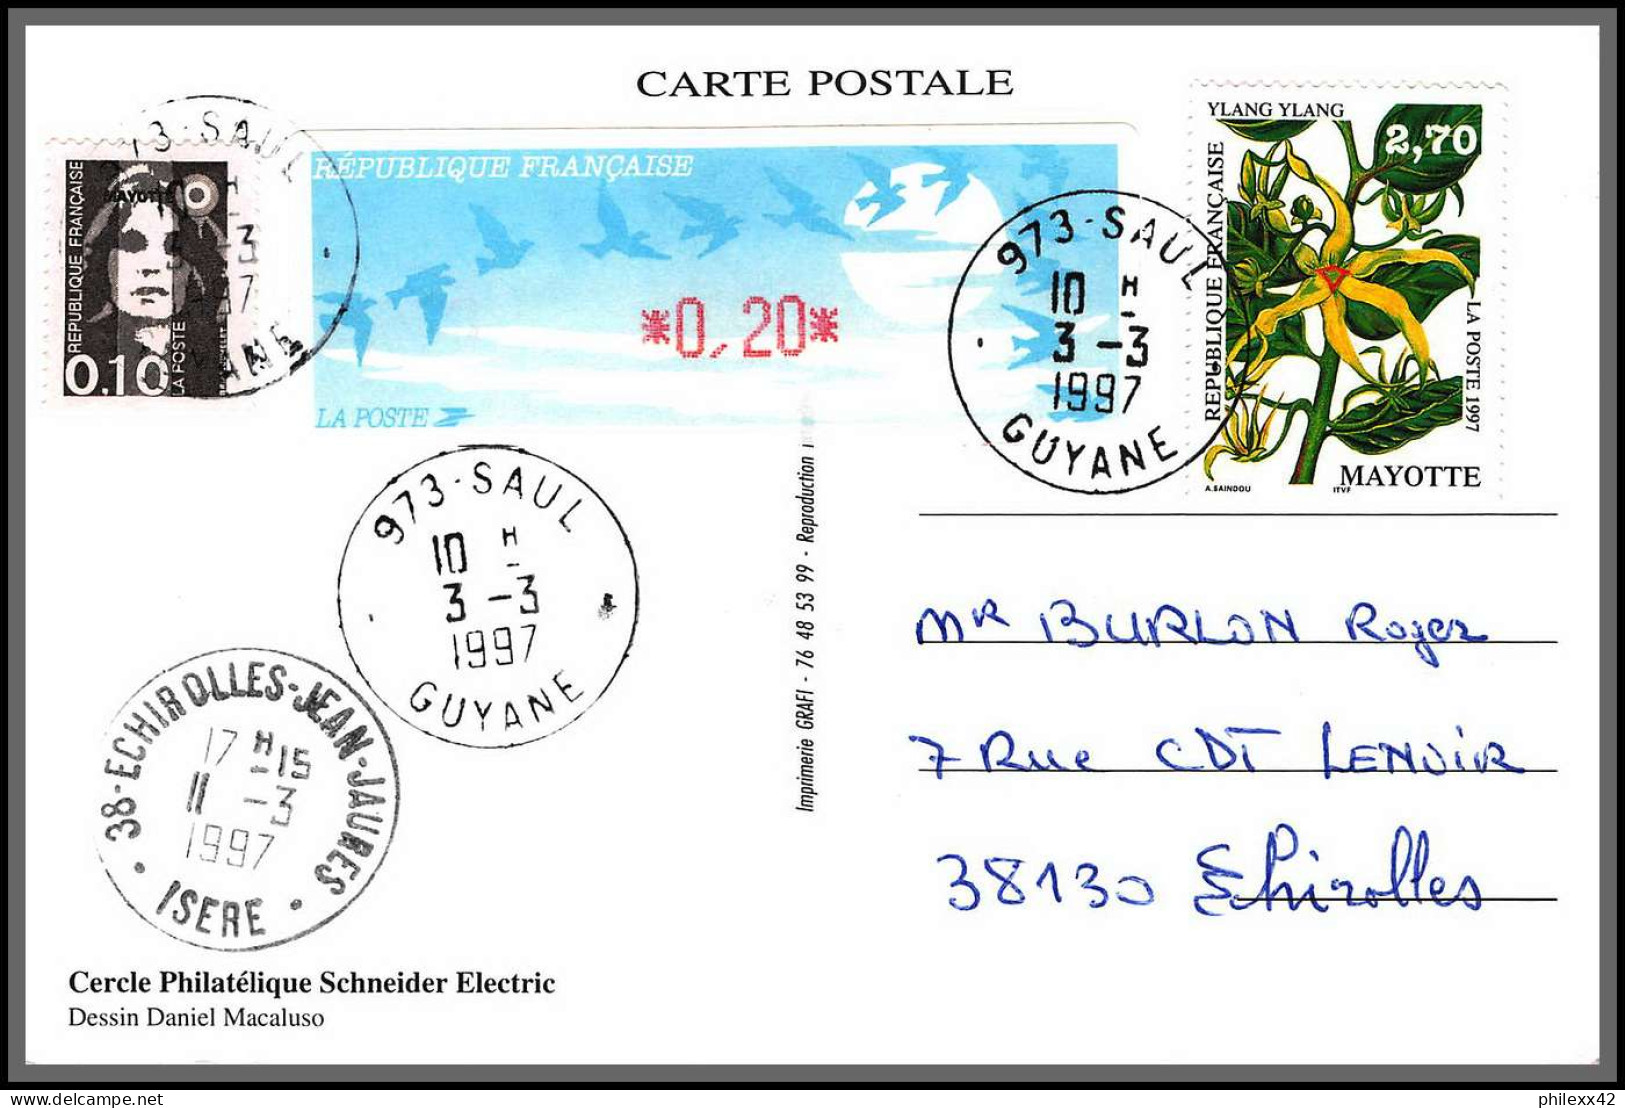 74328 Mixte Atm Briat 3/3/1997 Saul Guyane Echirolles Isère France Carte Postcard Colonies Seyssin - Covers & Documents